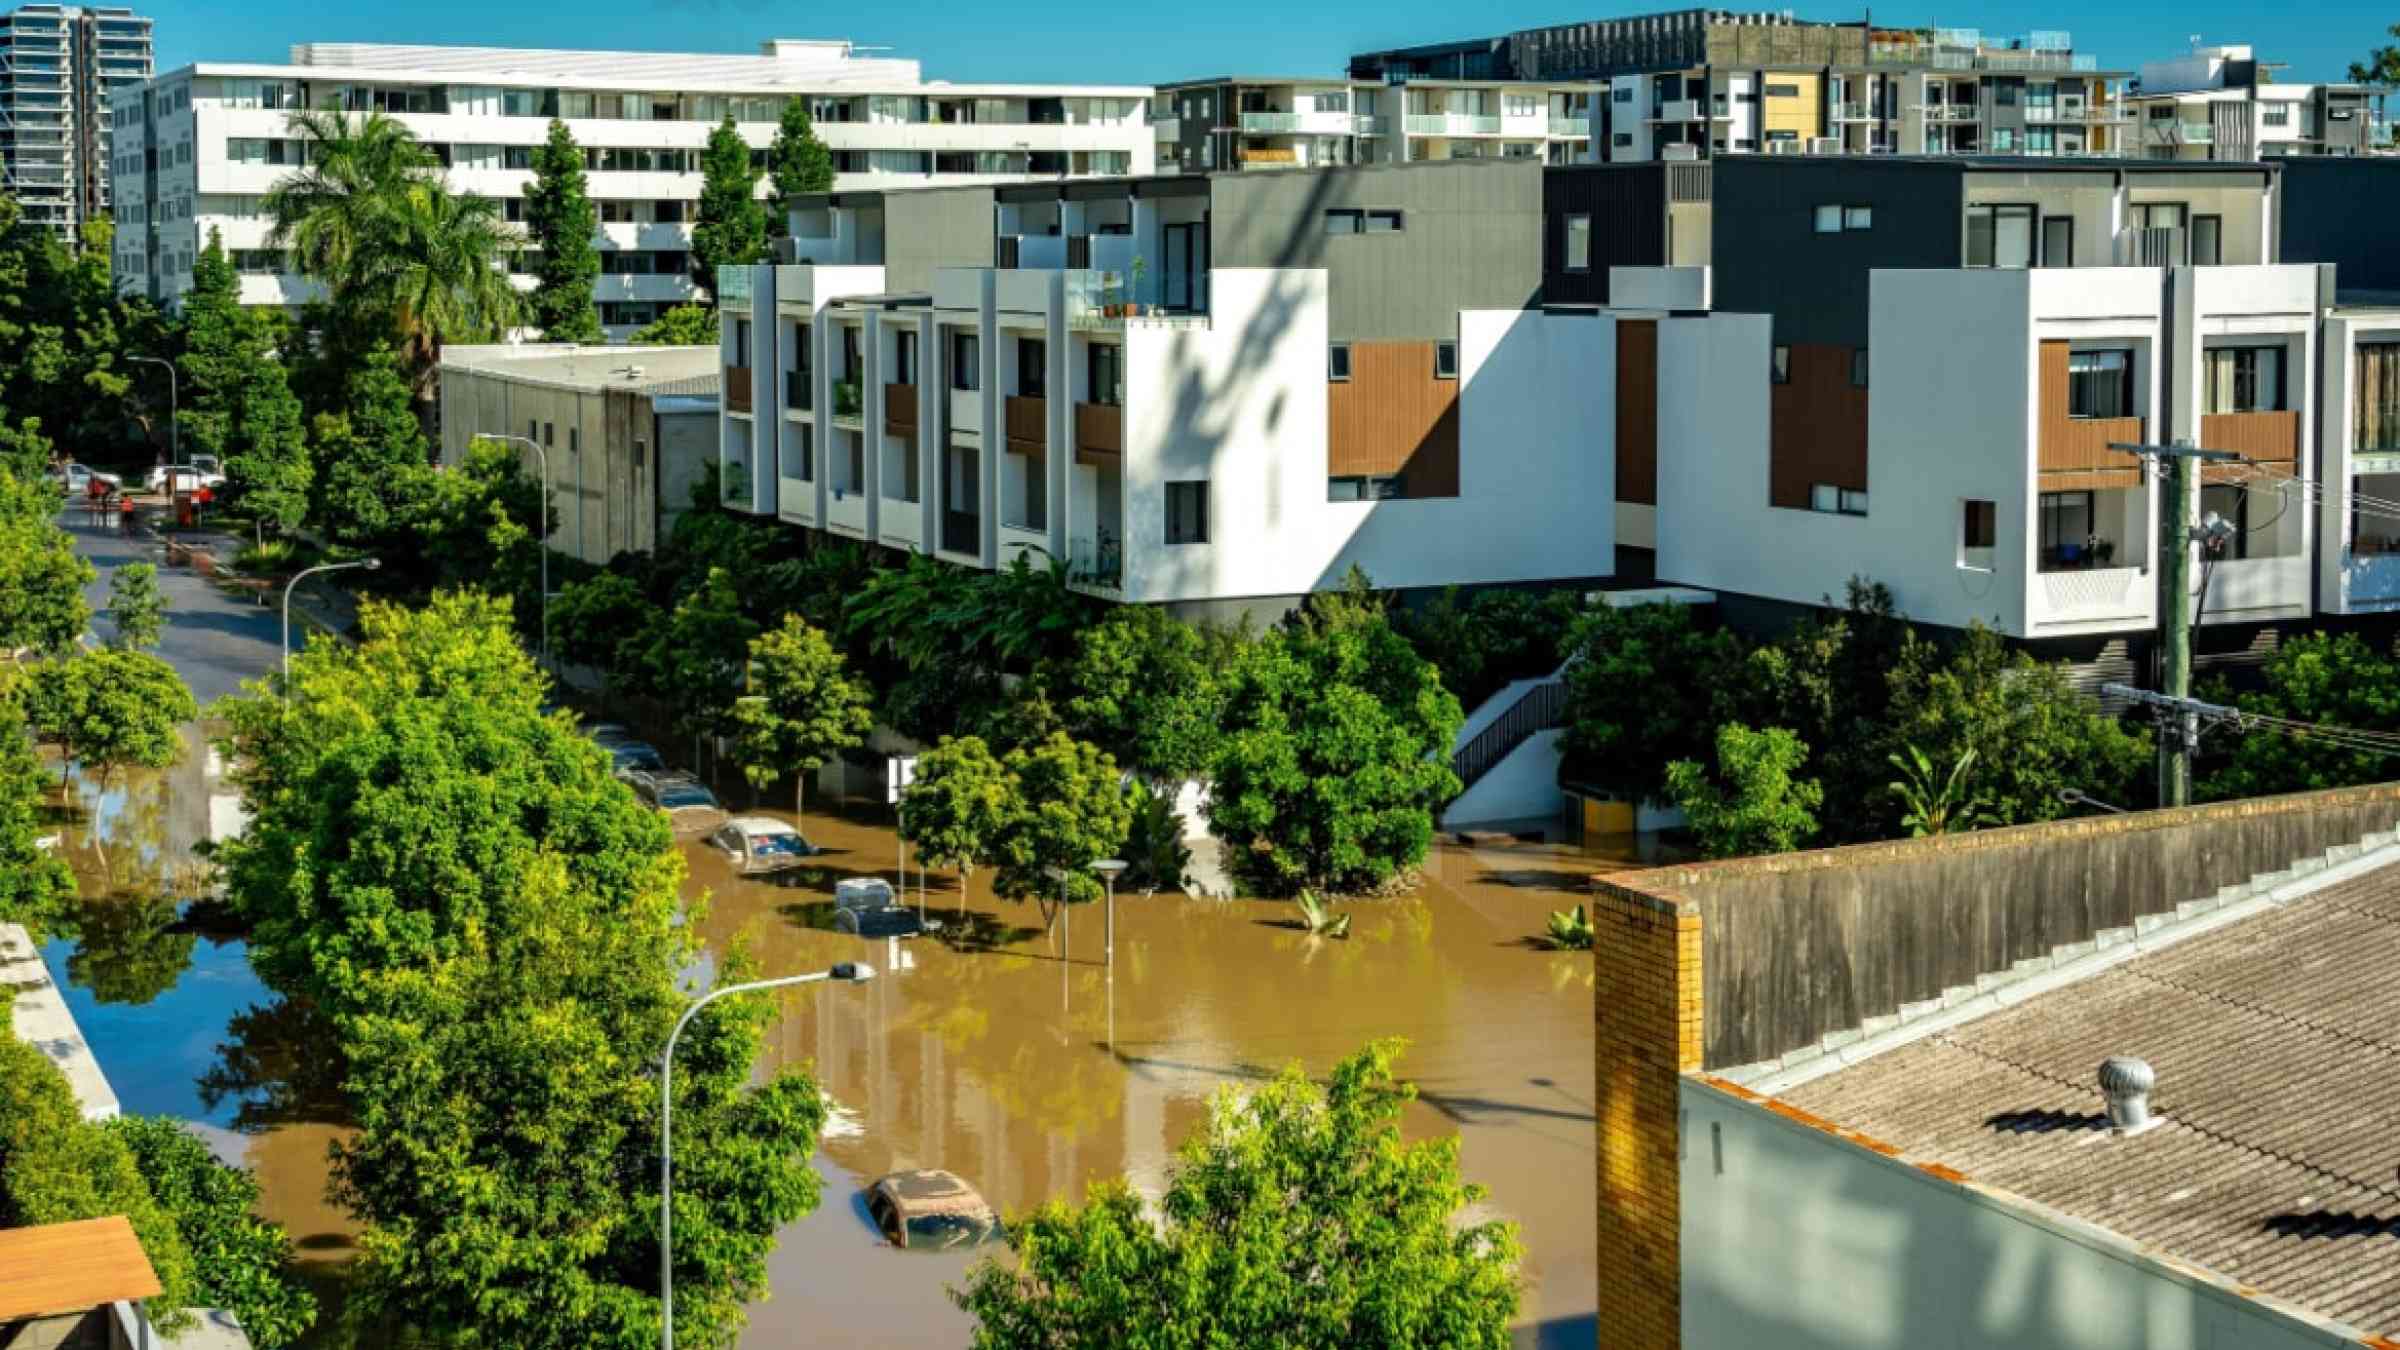 Flood aftermath in West End suburb in Brisbane, Australia on March 1, 2022